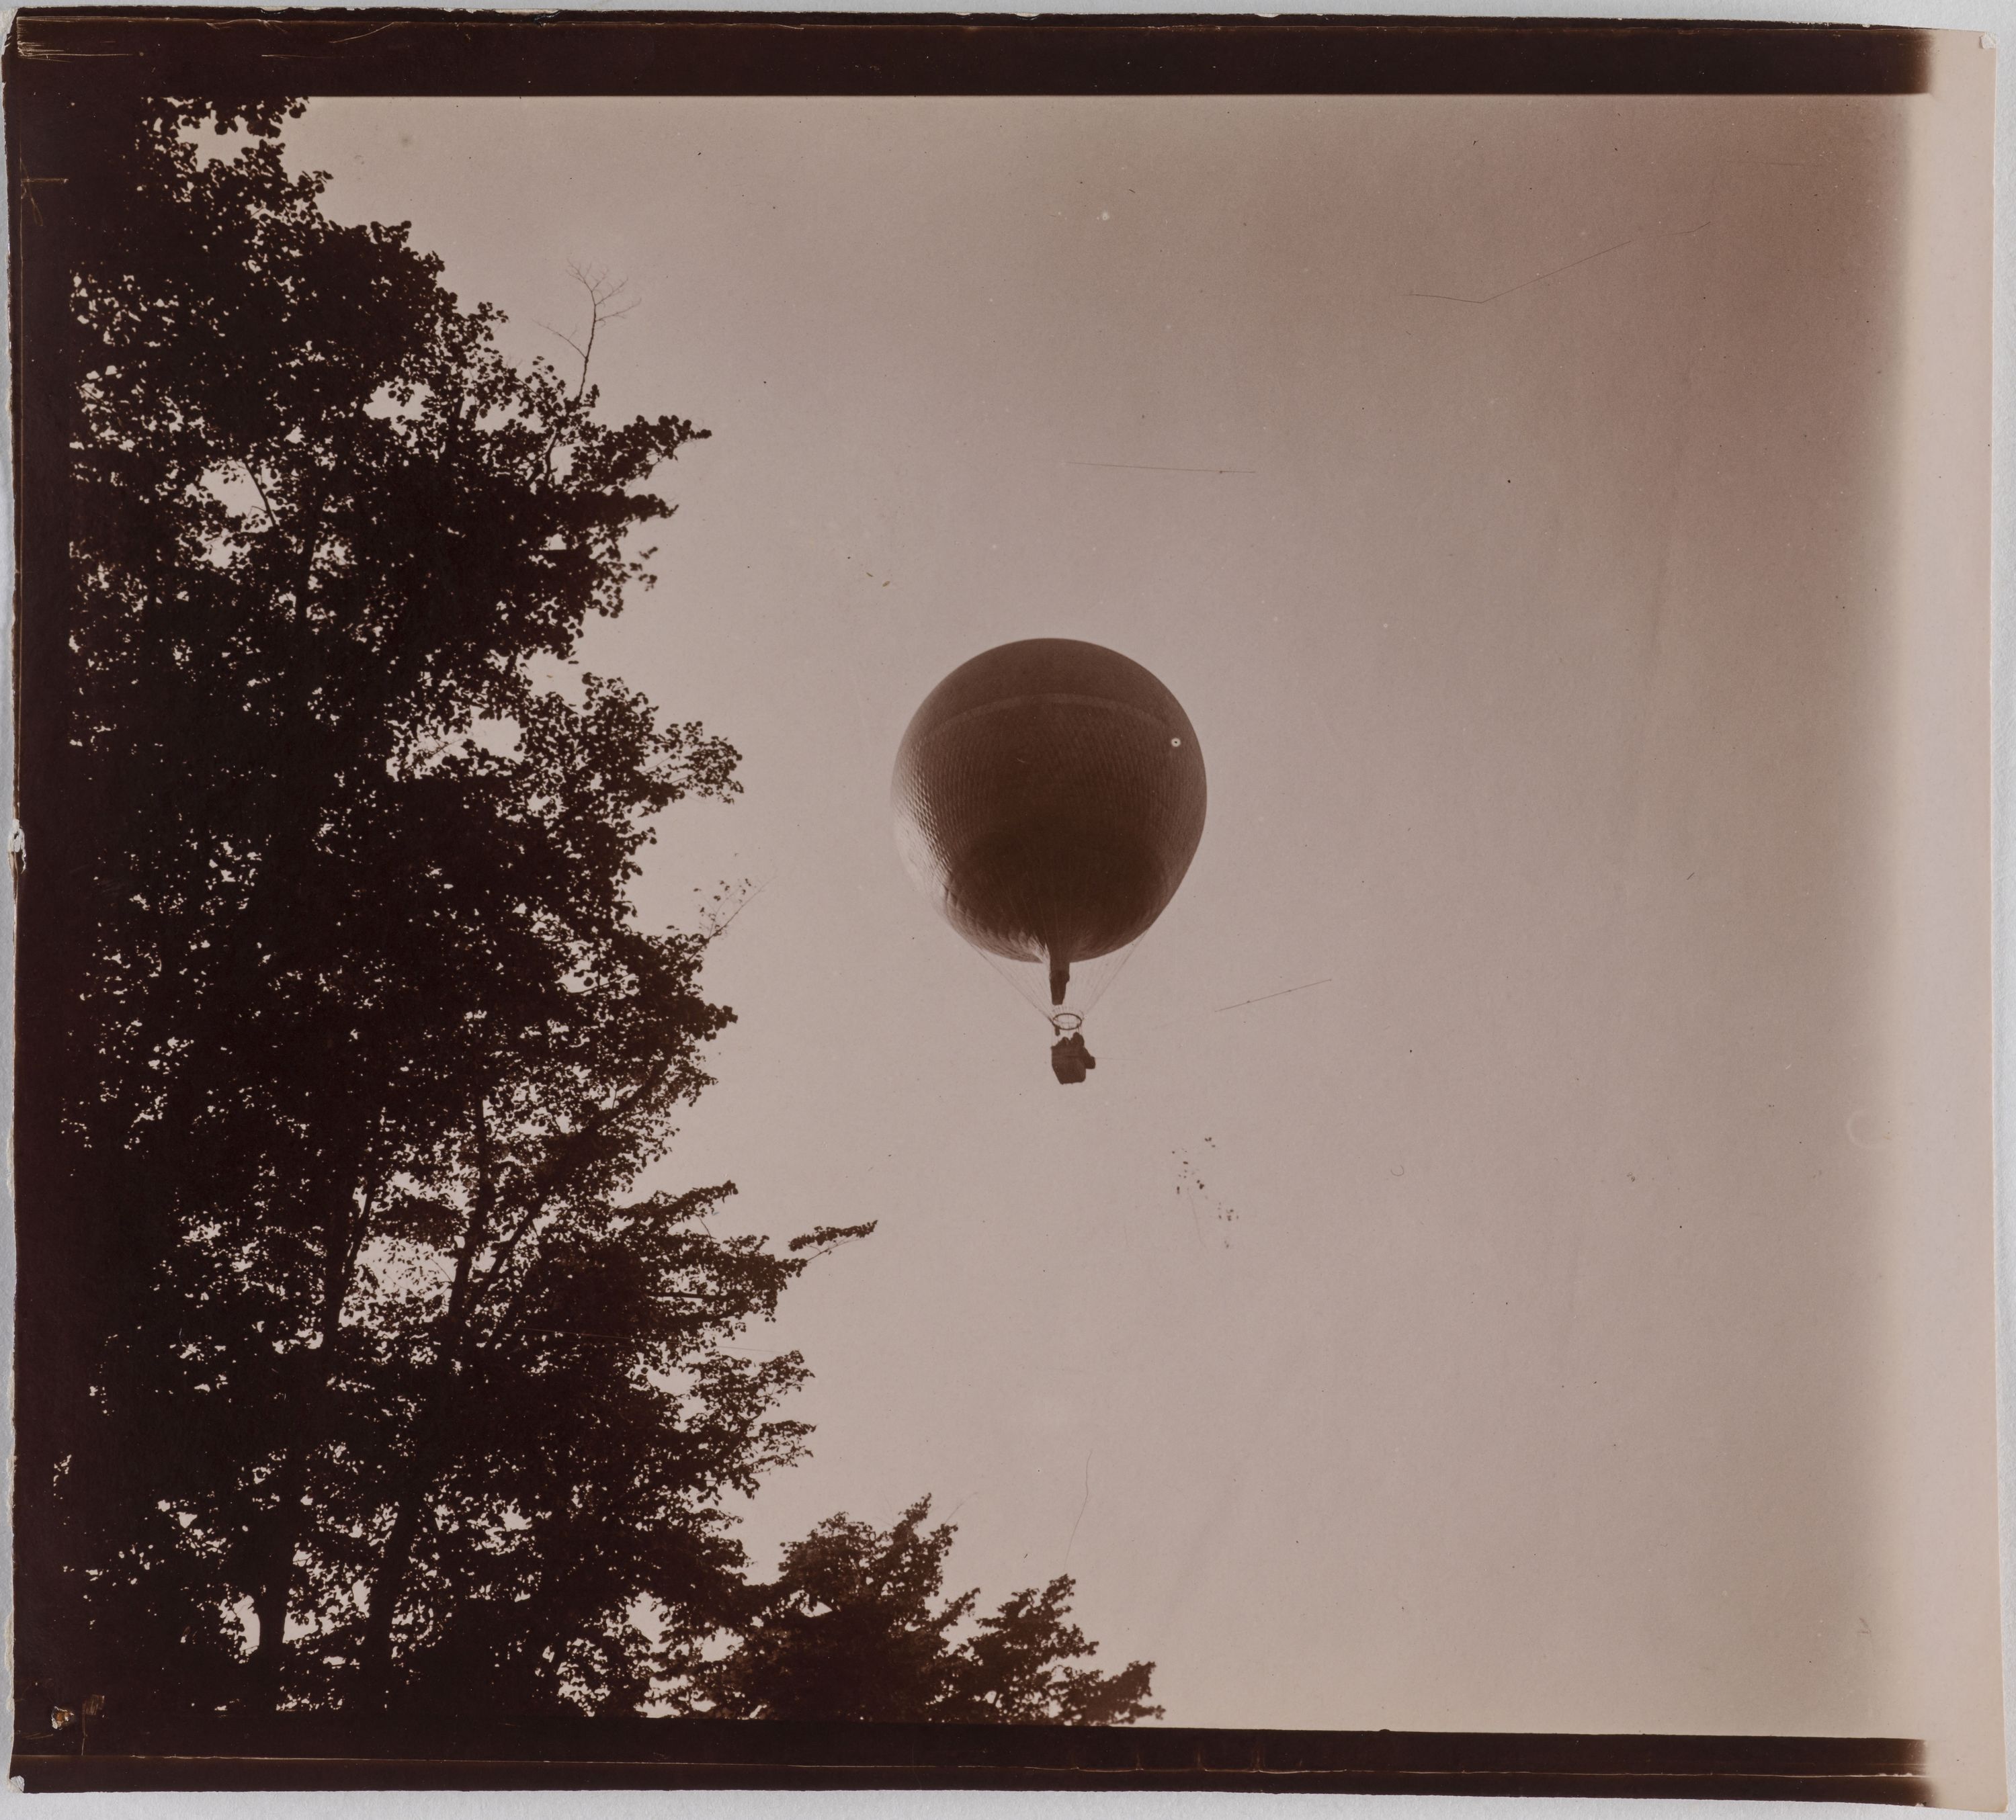 https://upload.wikimedia.org/wikipedia/commons/1/1e/Ballon_volant_dans_le_ciel._PH19088.jpg